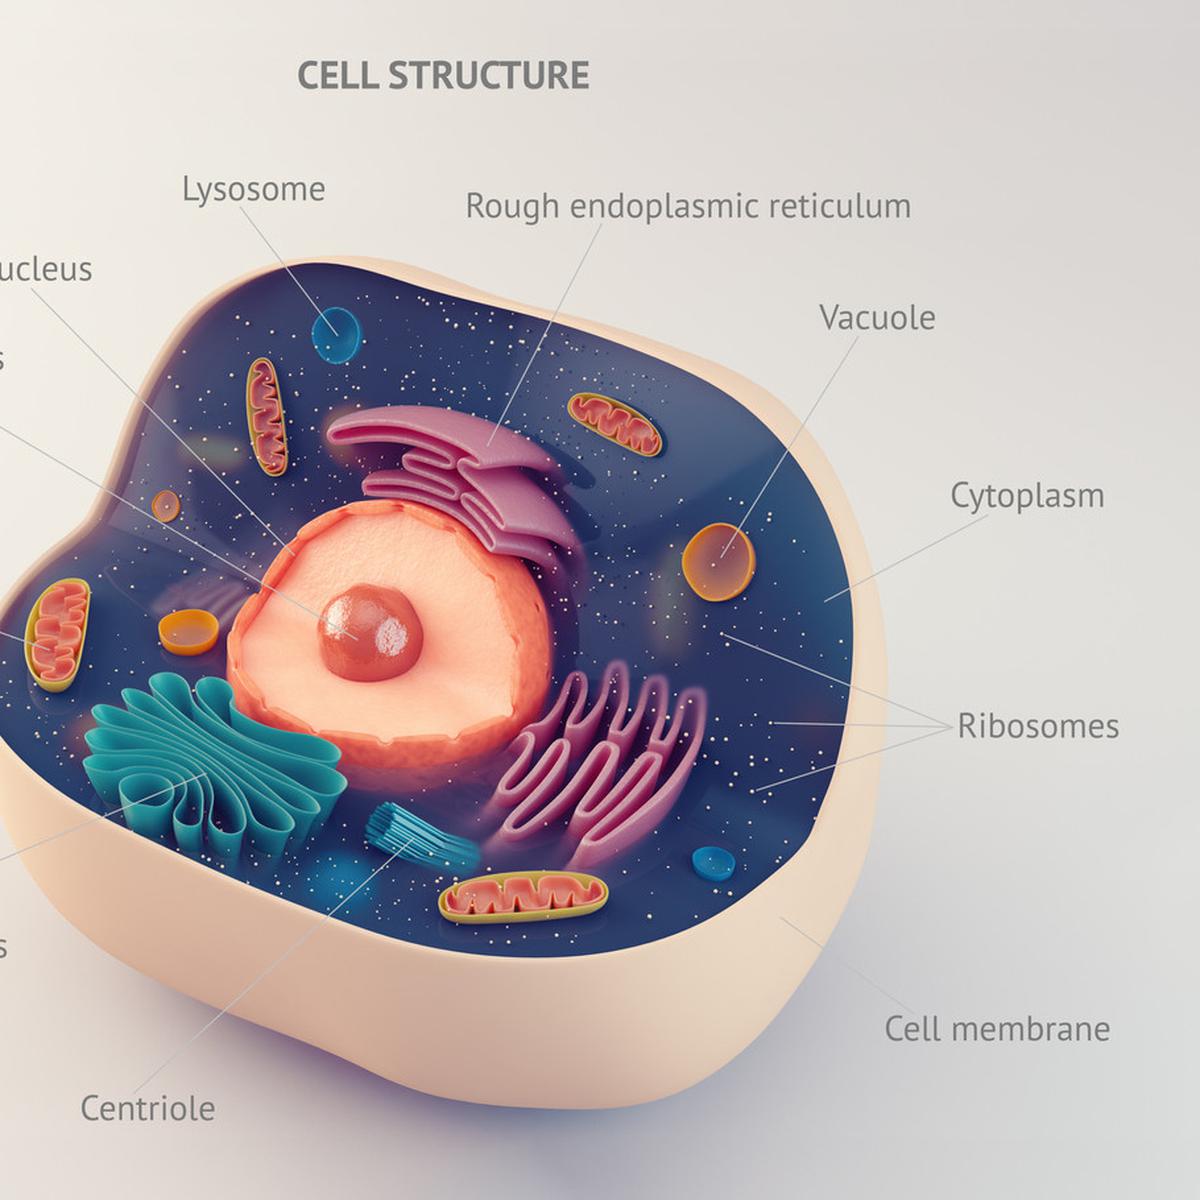 Perhatikan gambar sel hewan berikut organel sel yang ditunjukkan oleh huruf m berfungsi sebagai